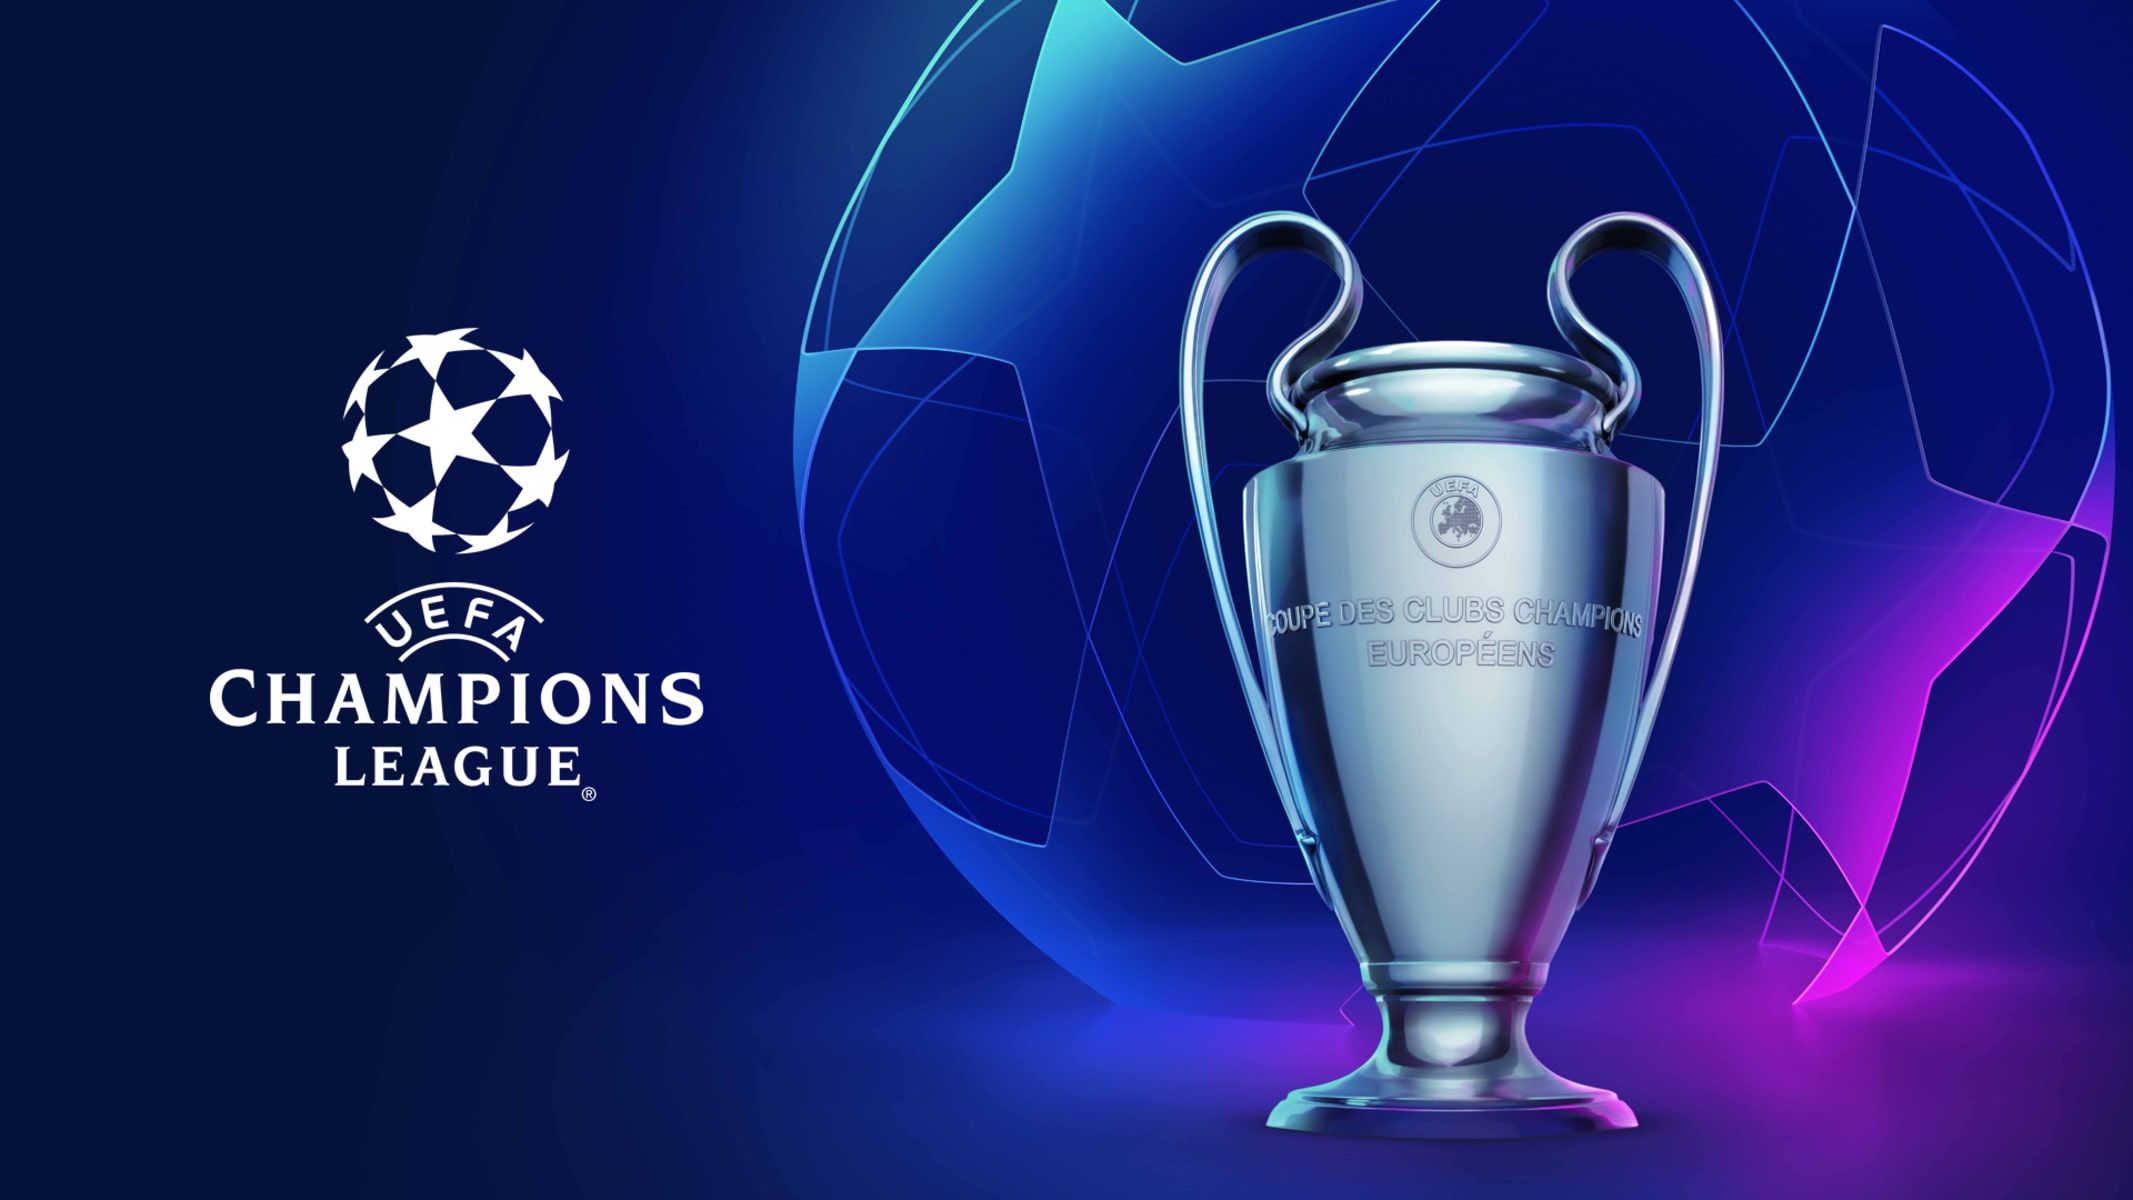 UEFA Champions League logo 2018 2021 1 min